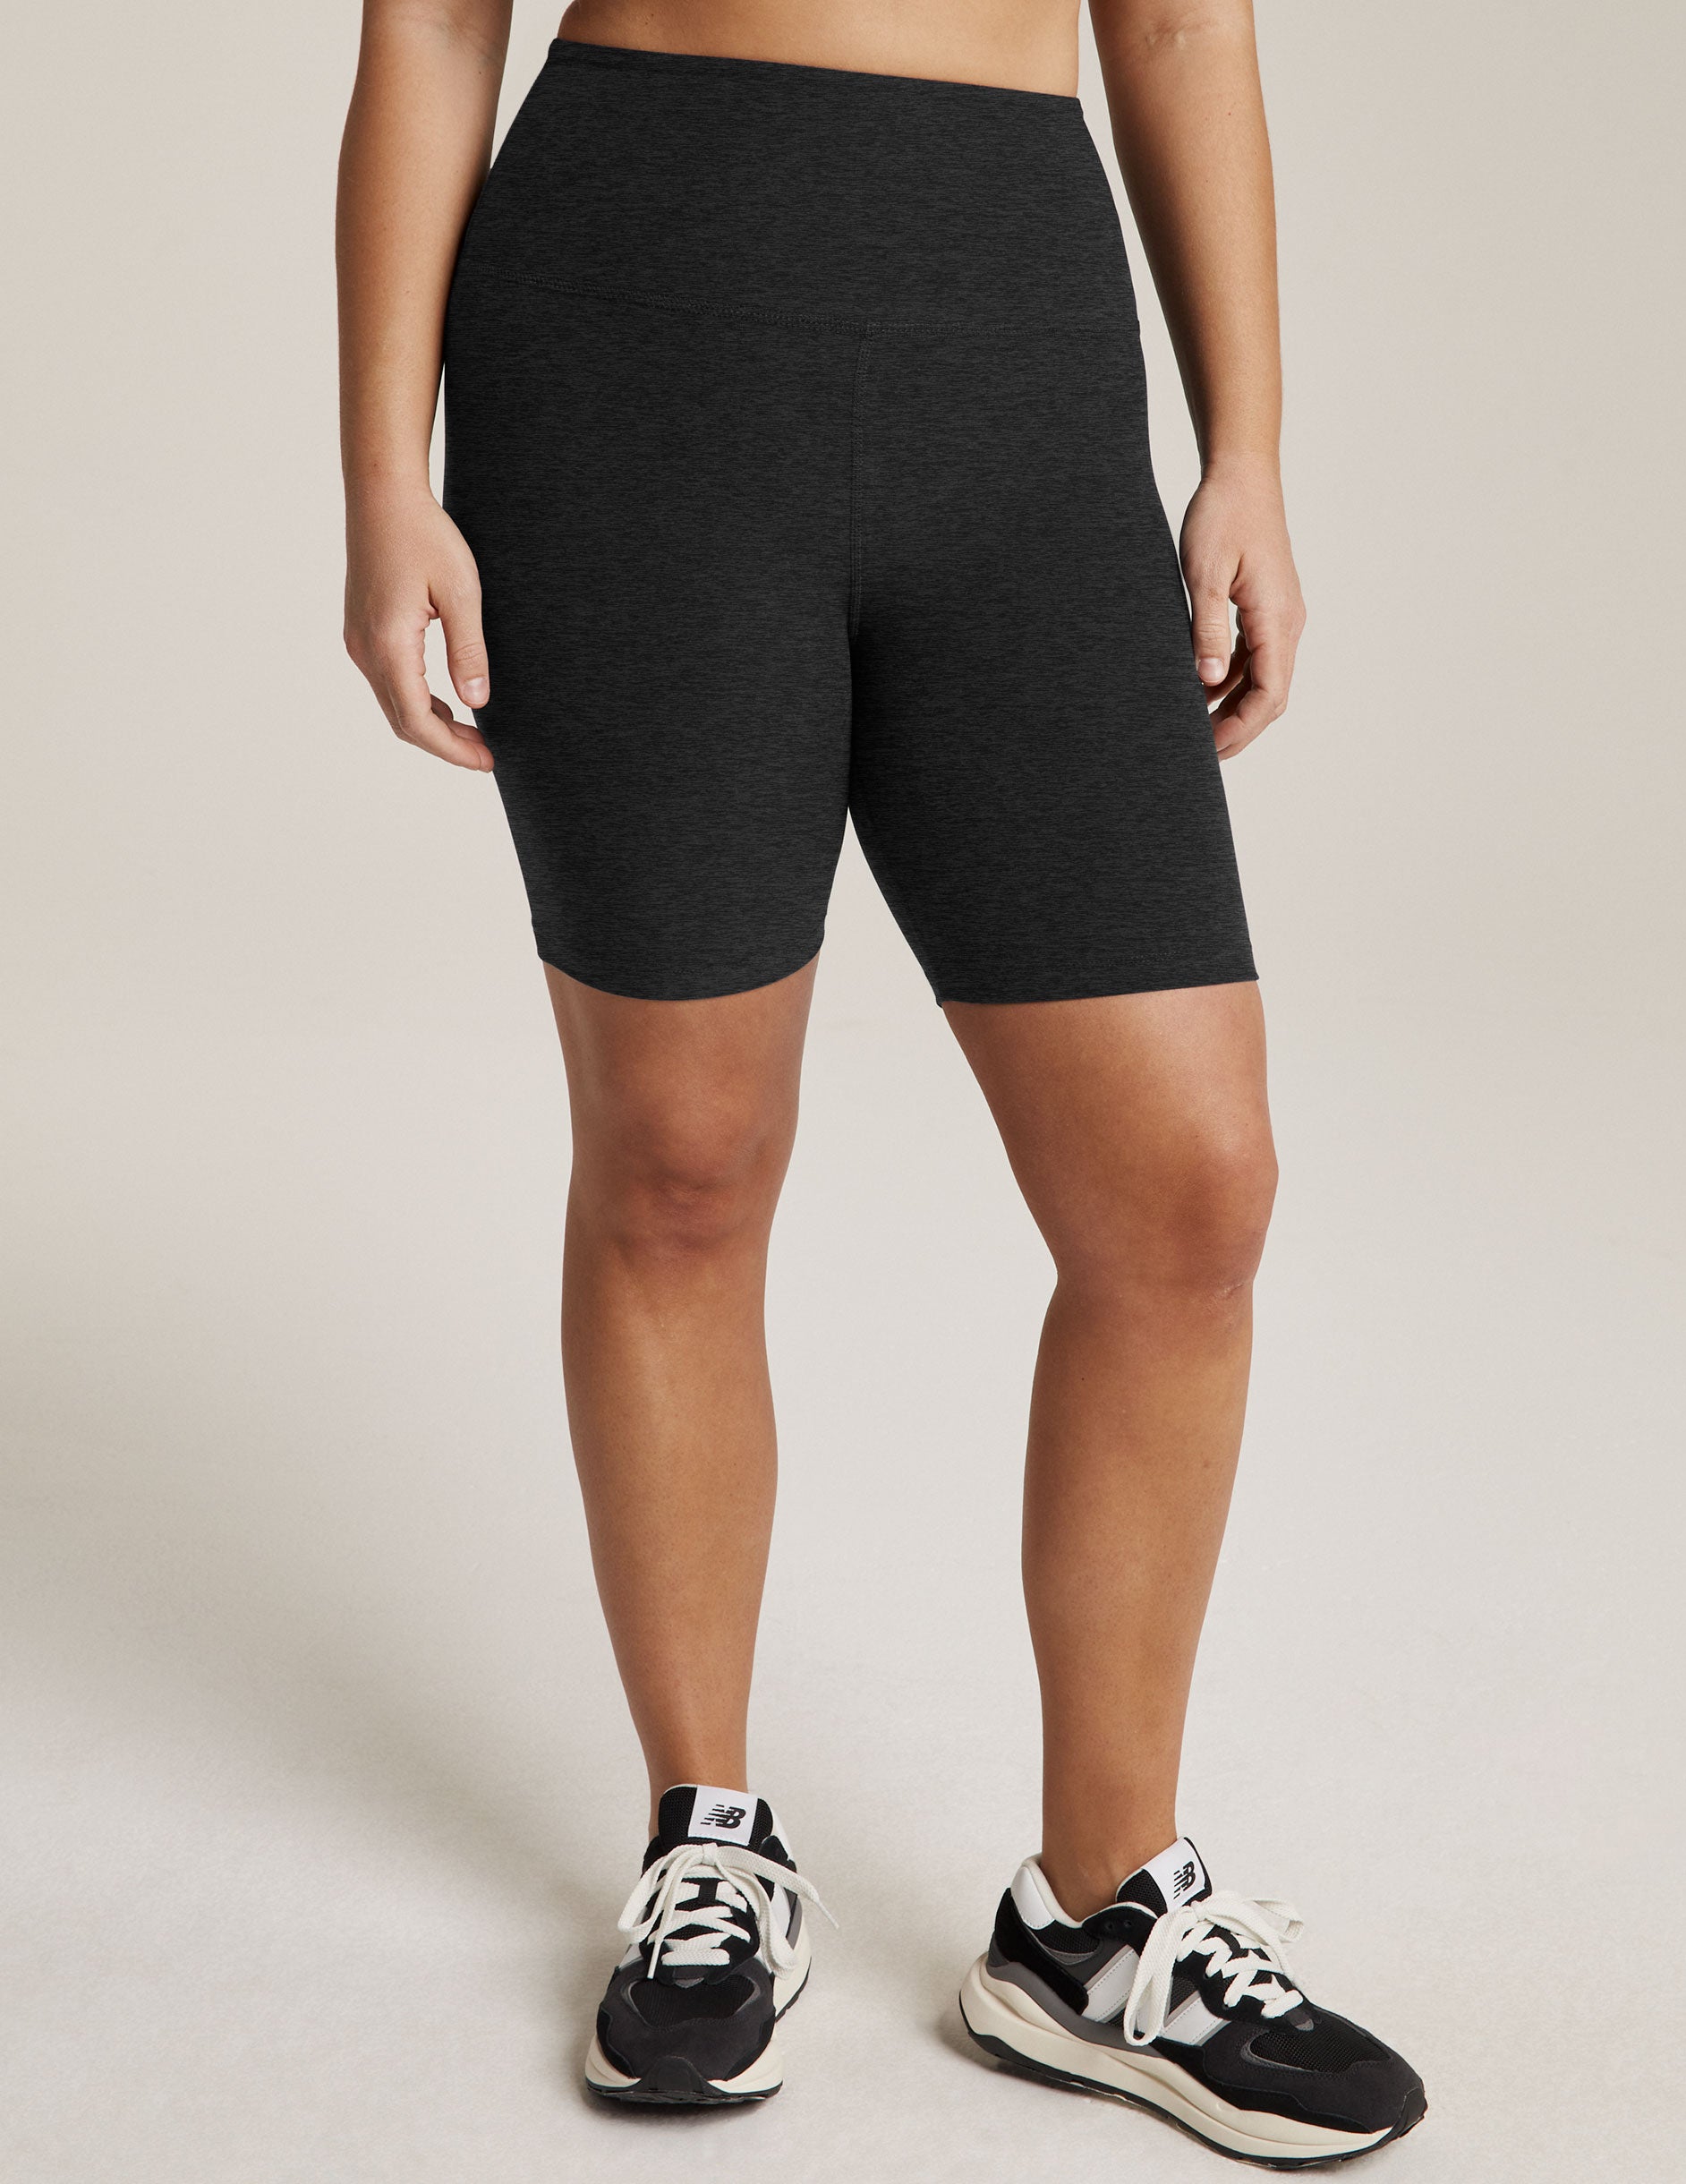 VALANDY Biker Shorts for Women High Waisted Workout Shorts for